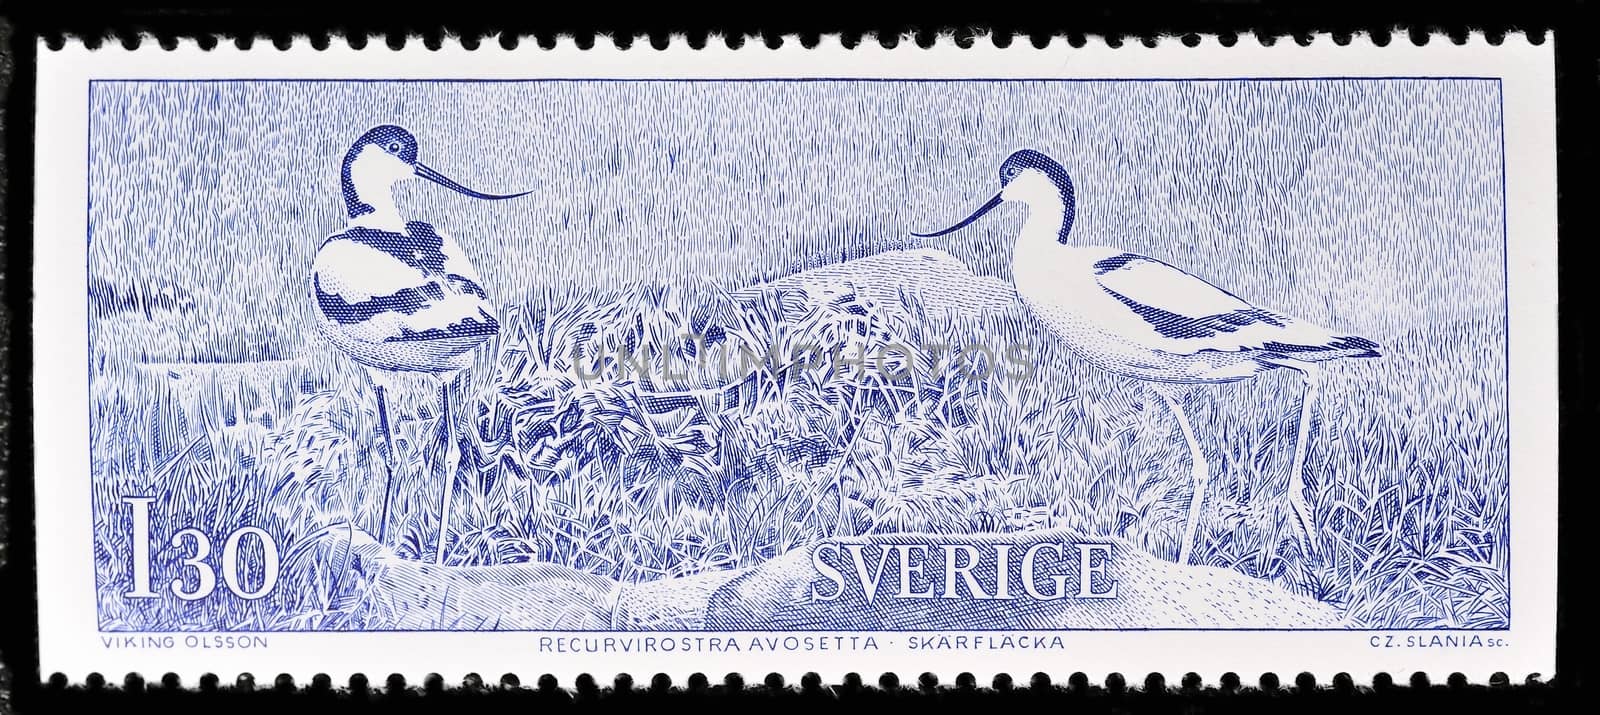 SWEDEN - CIRCA 1978: stamp printed by Sweden, shows Avocet, circa 1978